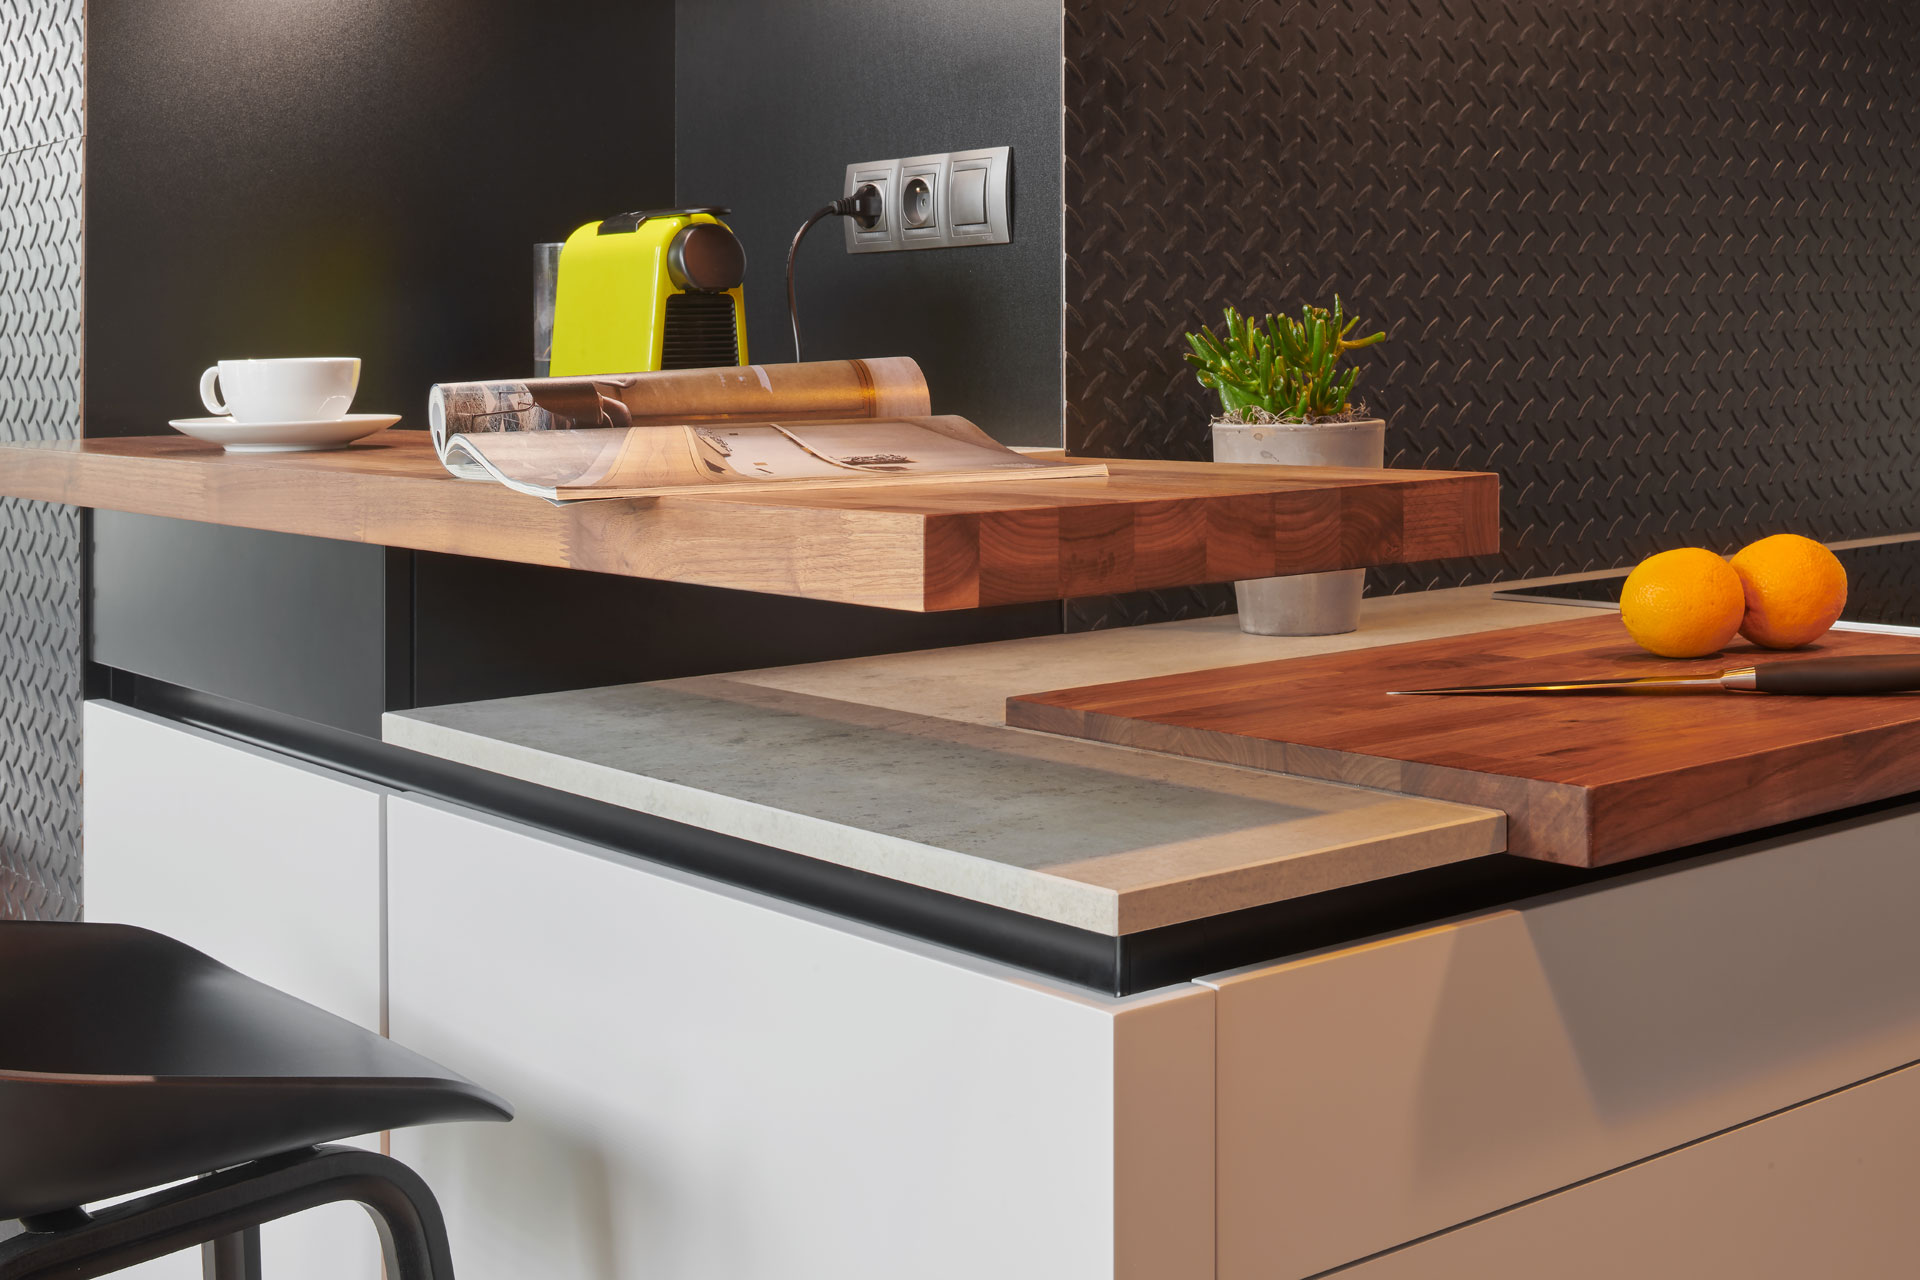 Hanák Furniture Realization of bespoke kitchen